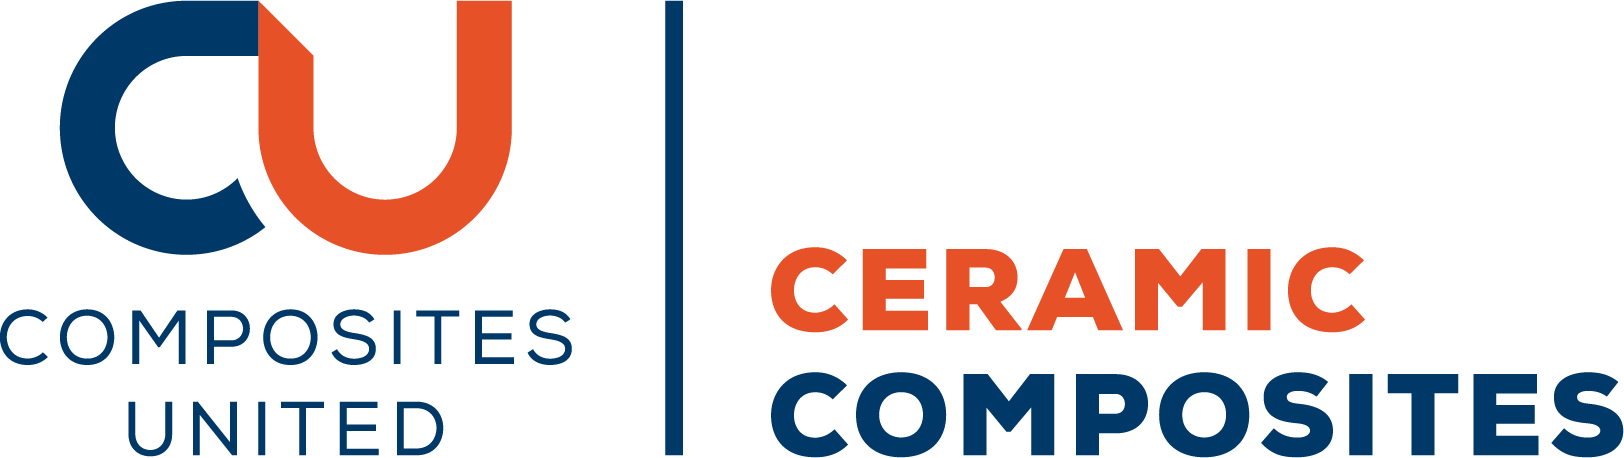 Logo of Ceramic Composites, a network of Composites United